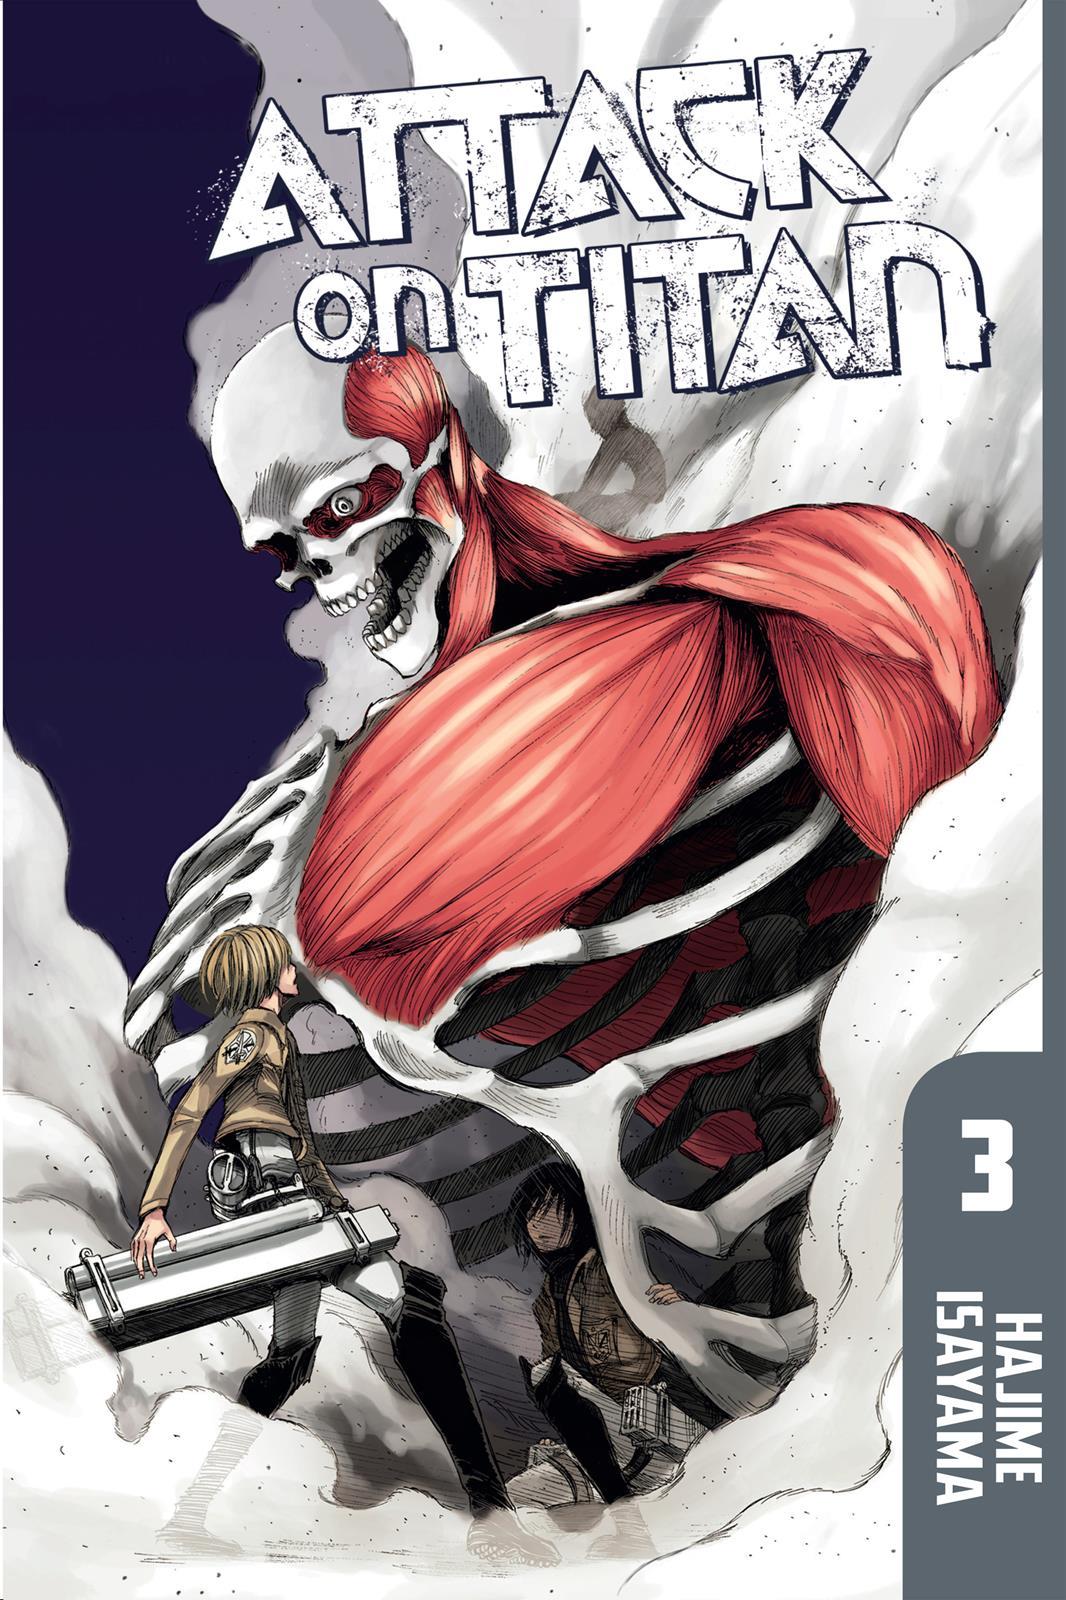 Shingeki No Kyojin, chapter 16 - Attack On Titan Manga Online